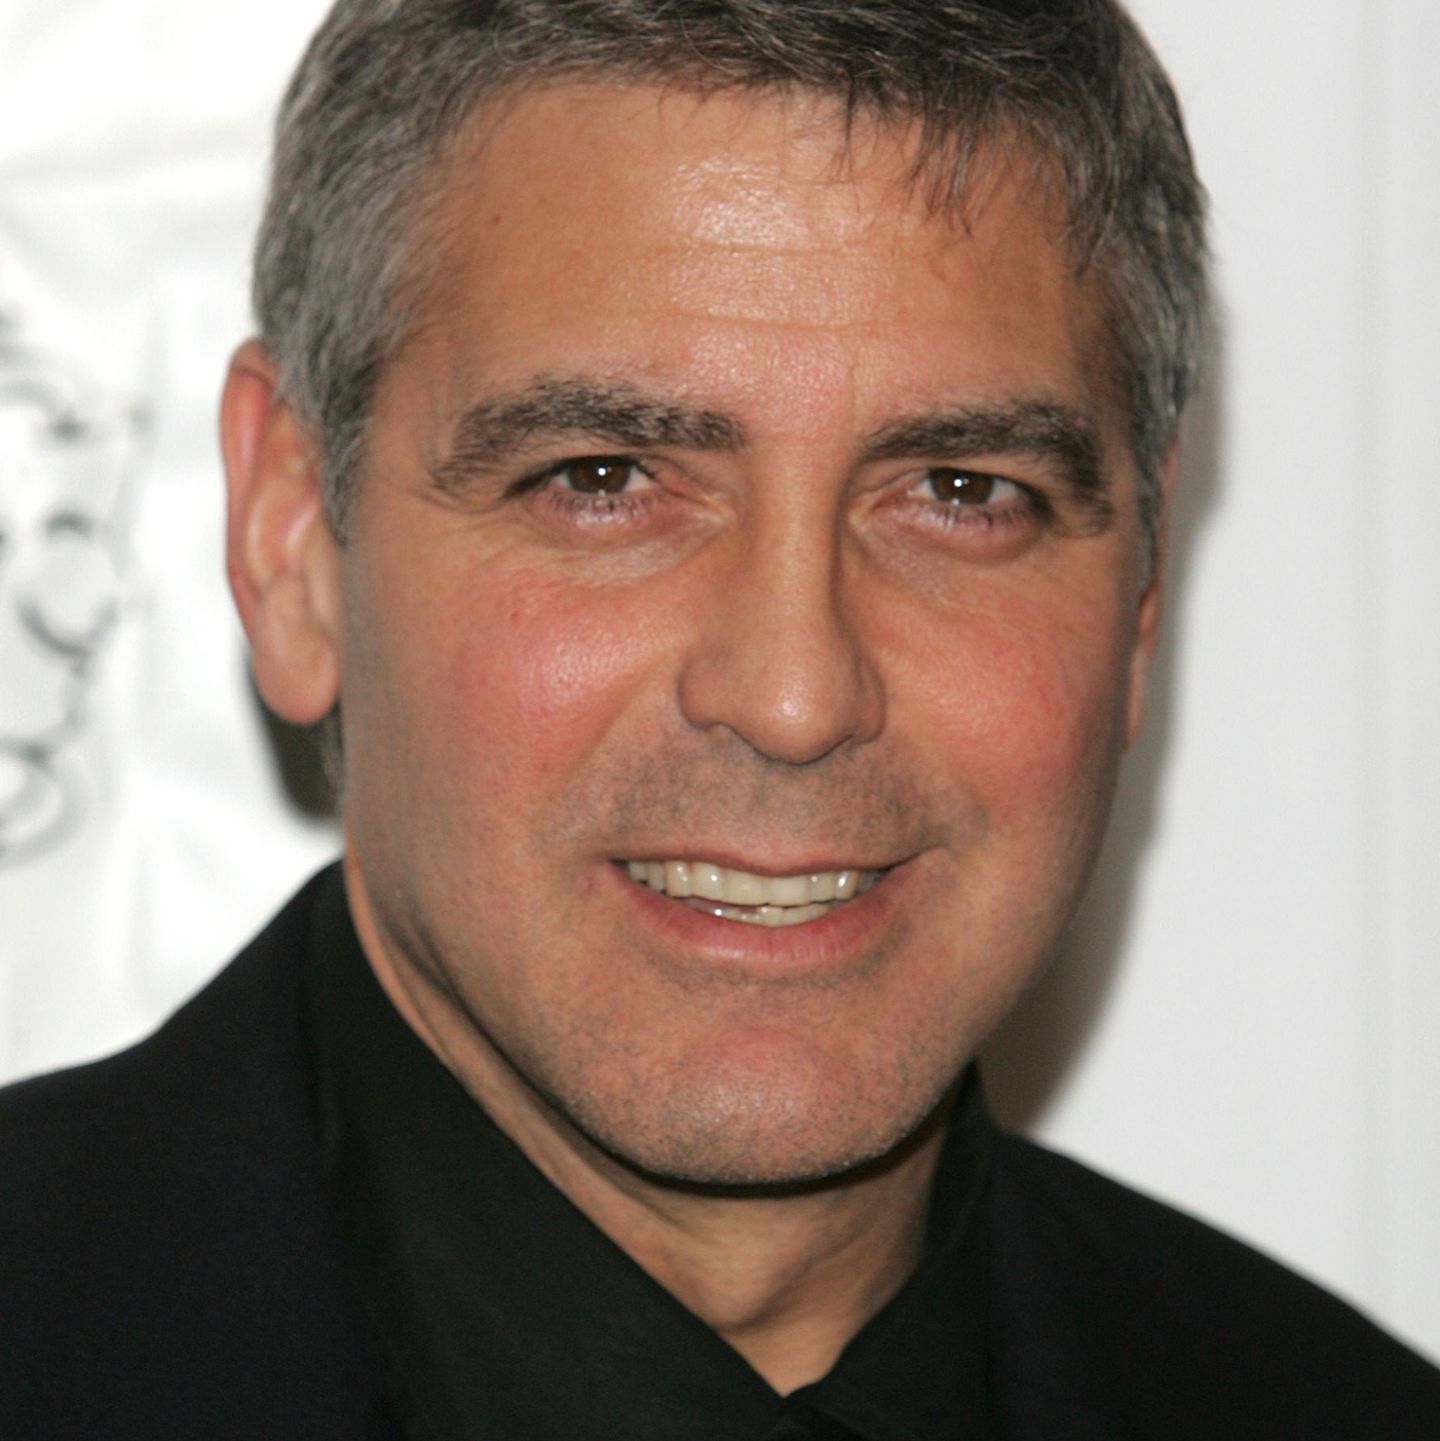 Sexiest Man Alive 2006 - George Clooney